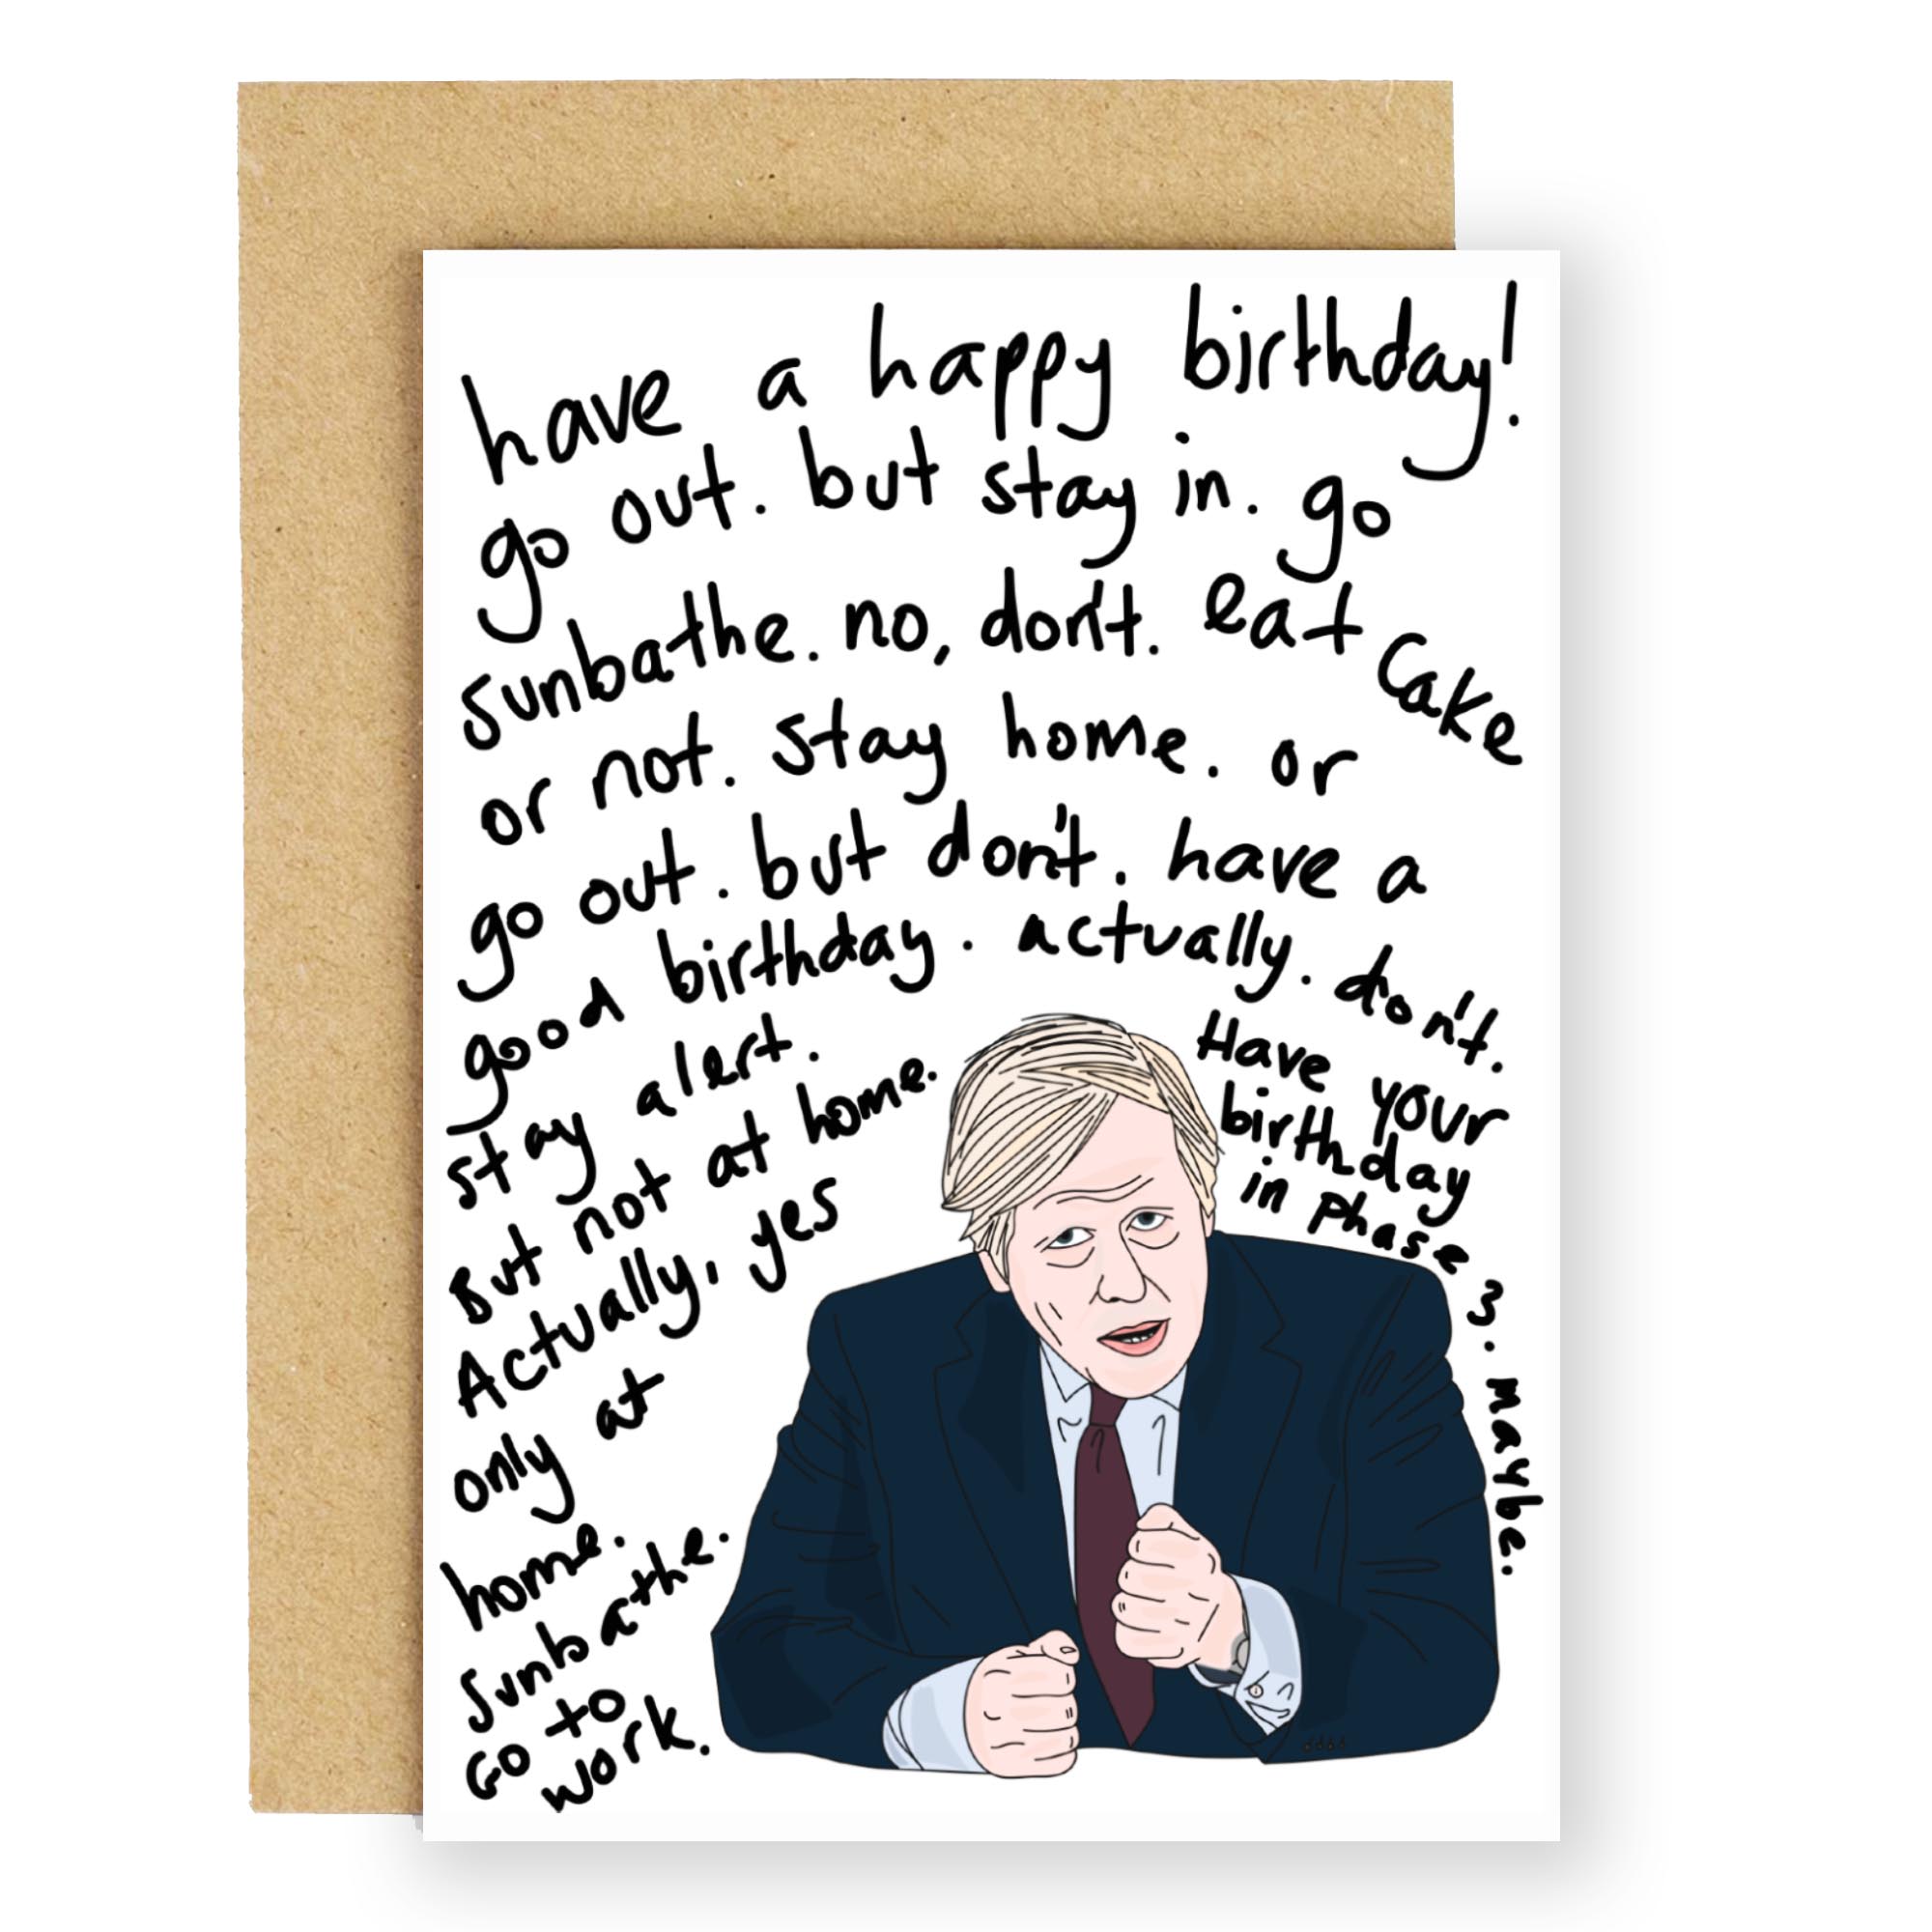 Boris greetings card (Image: Fifi Khudhairi)